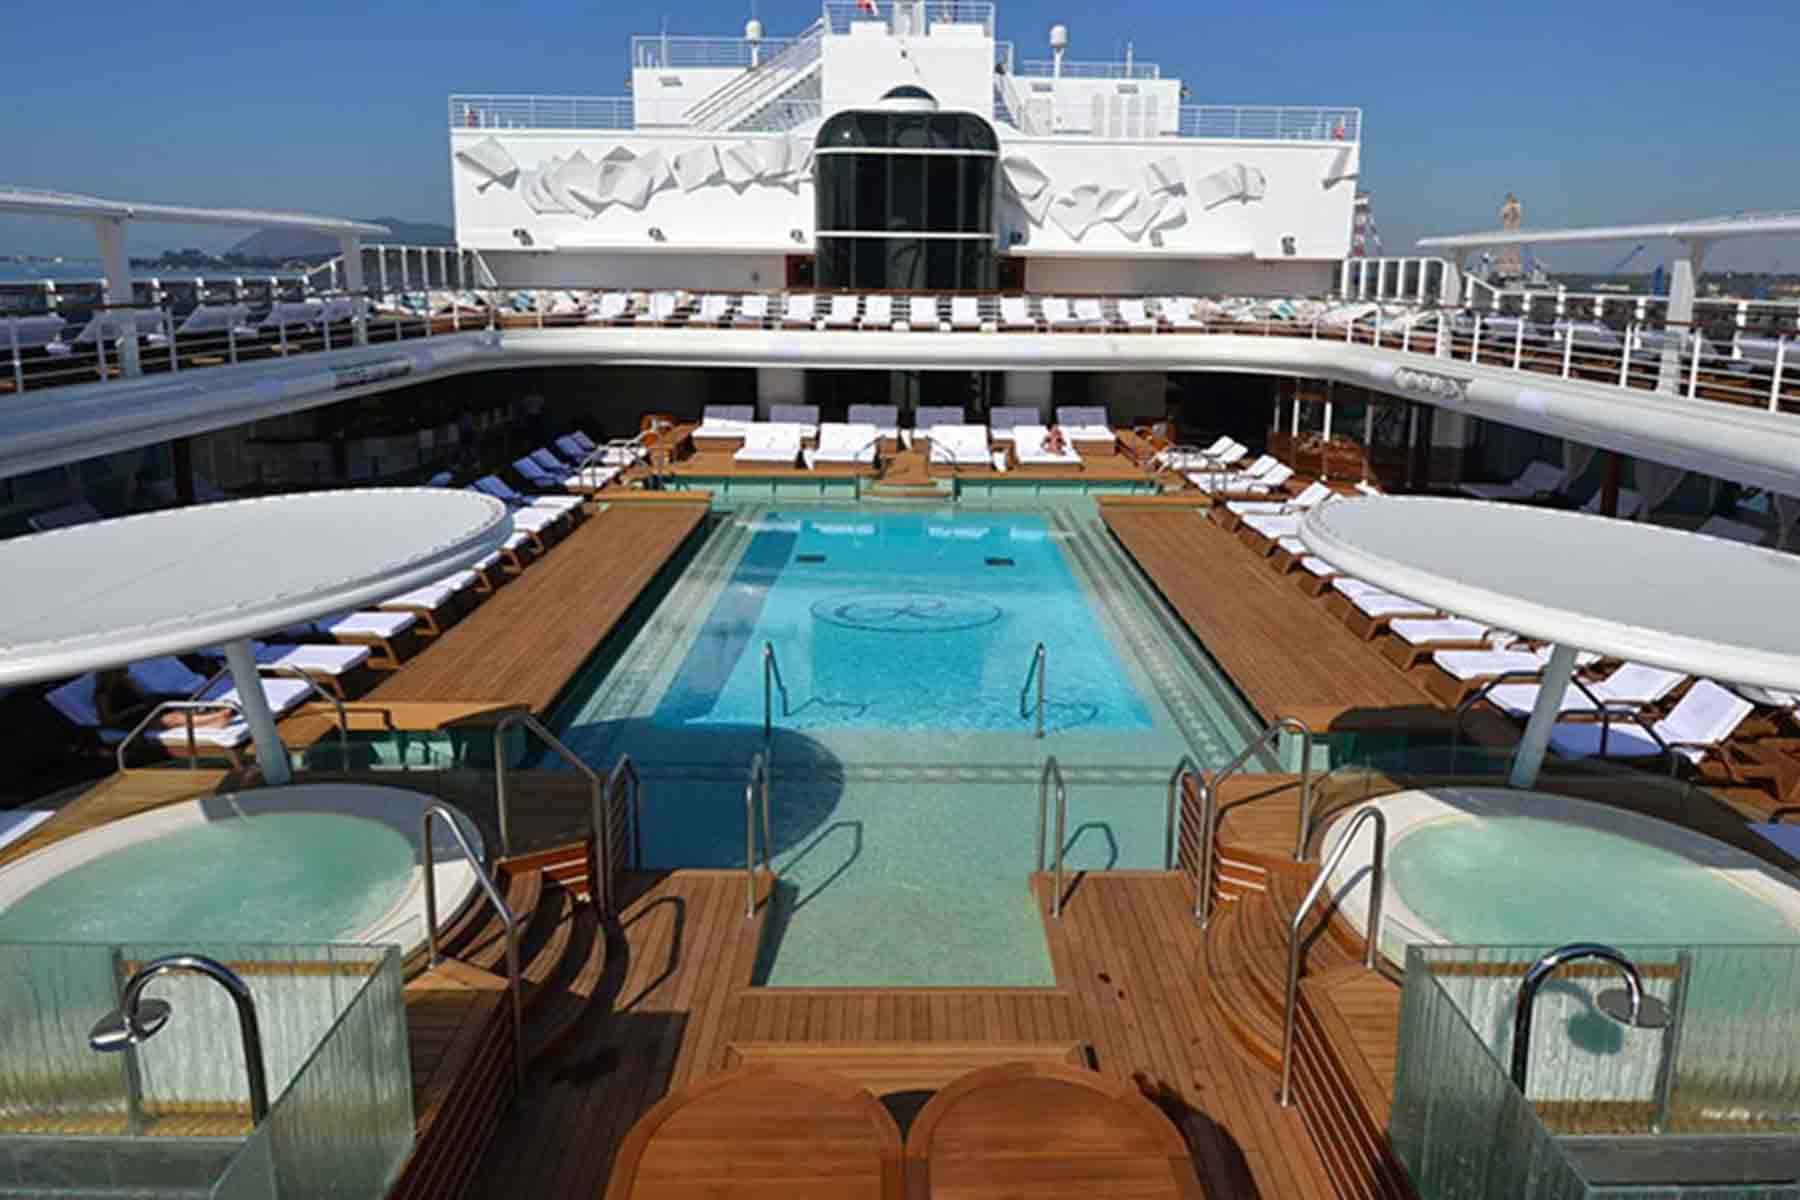 Top deck pool area on cruise ship